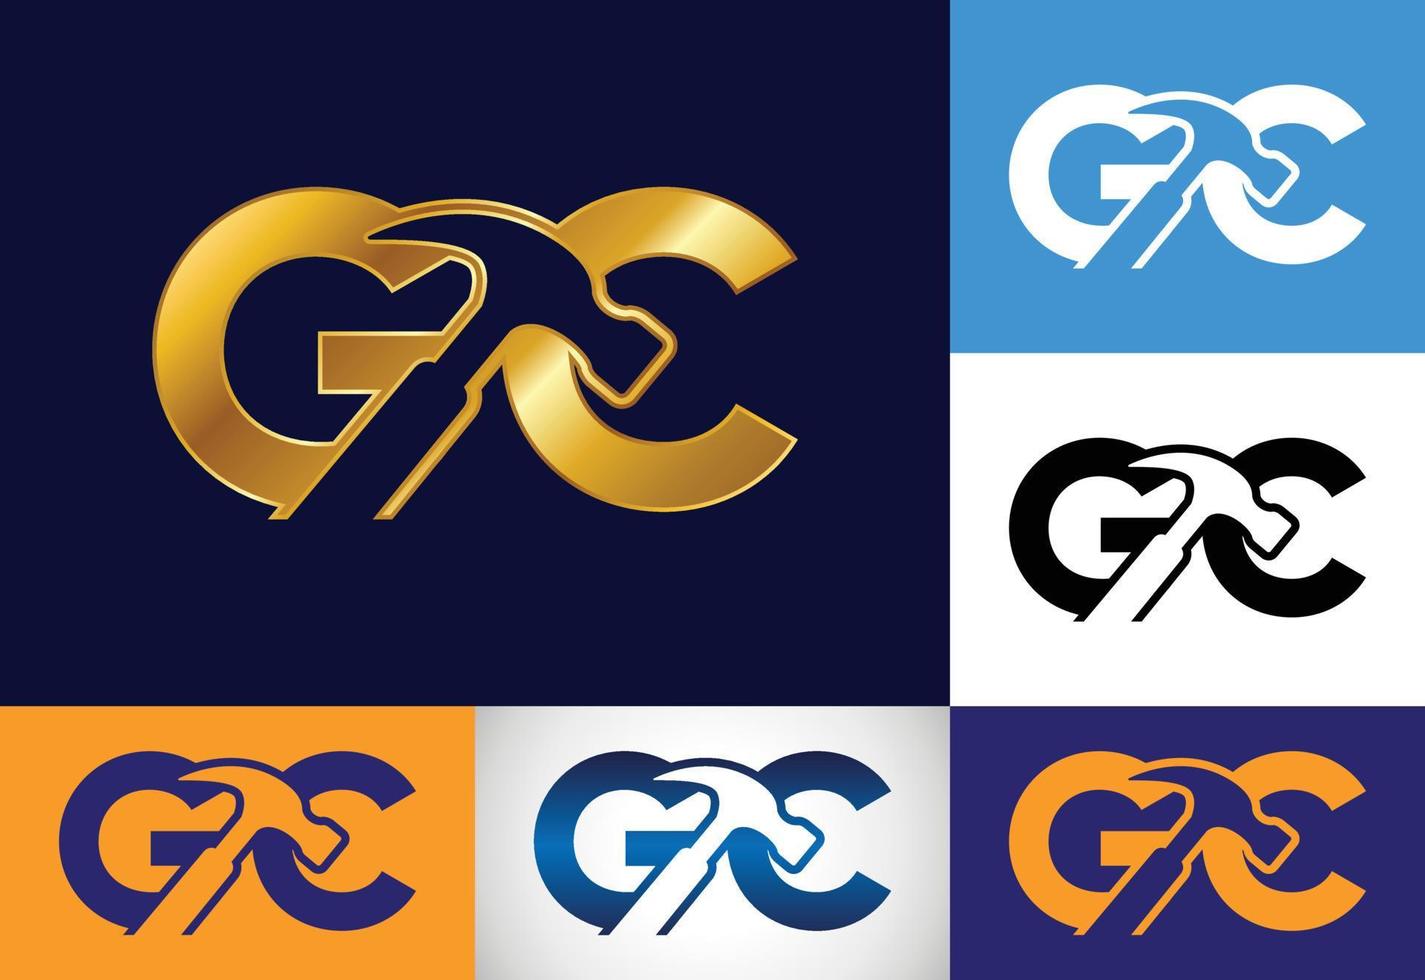 vetor de design de logotipo gc letra inicial. símbolo gráfico do alfabeto para identidade de negócios corporativos